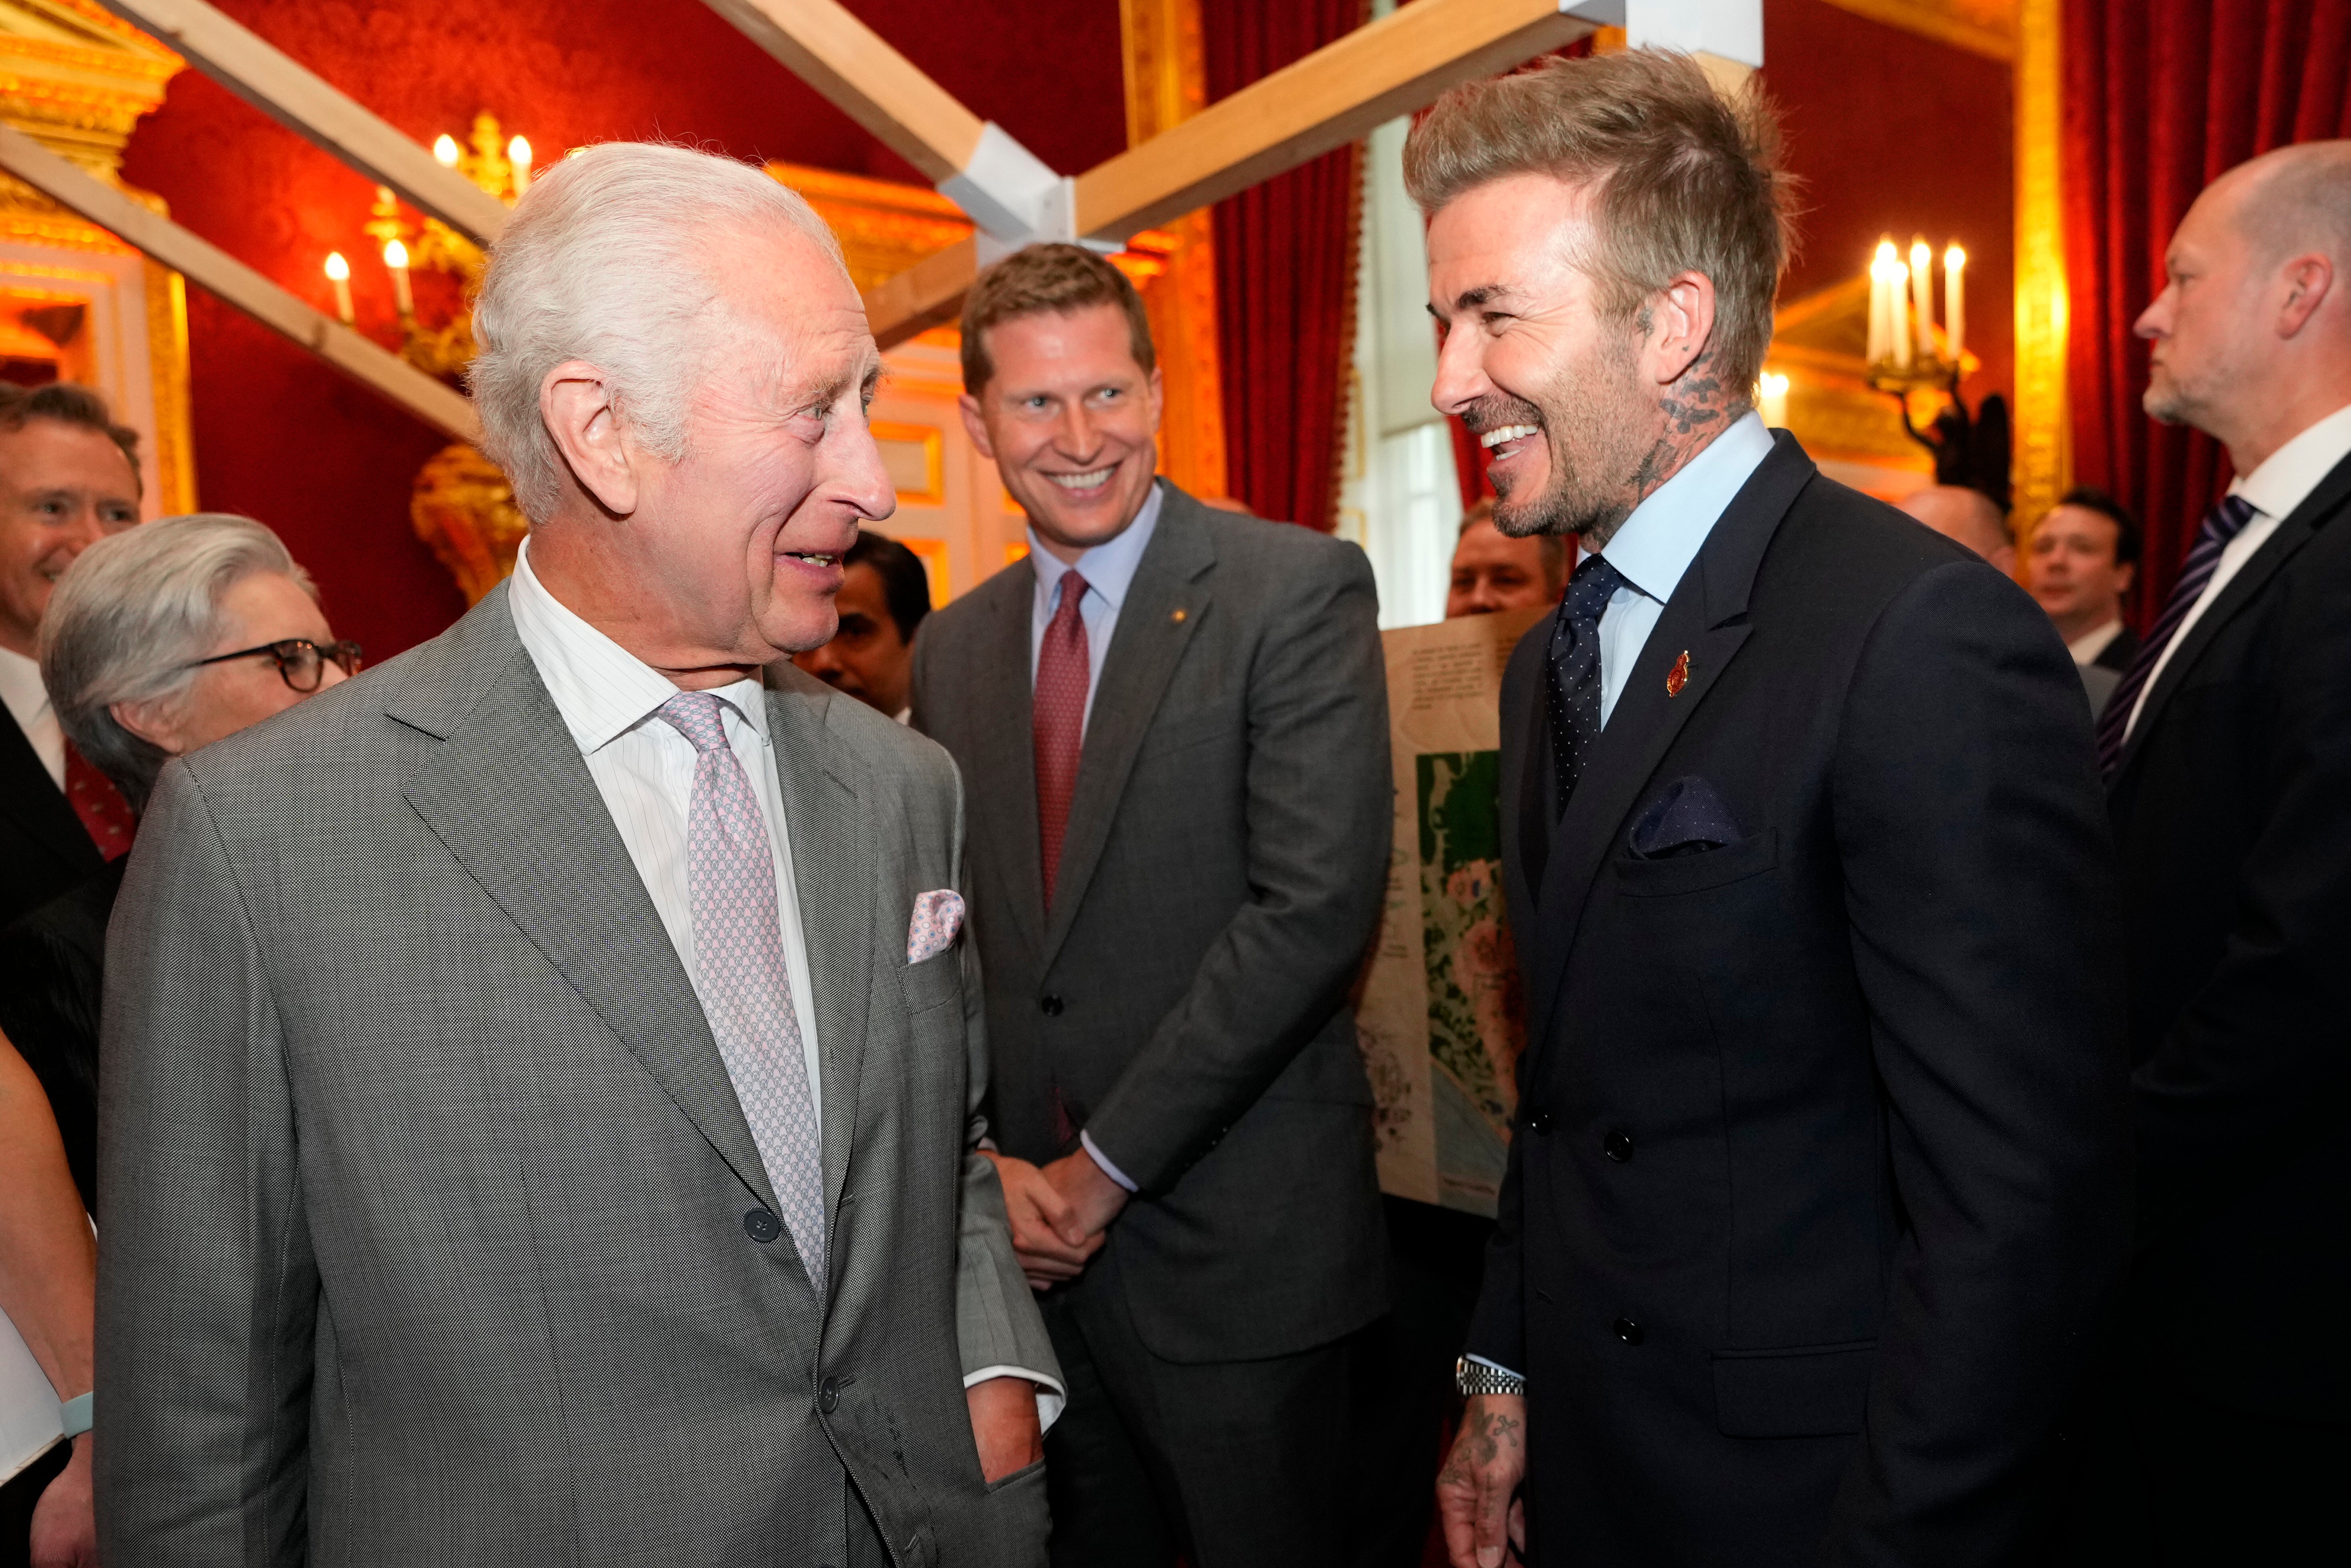 King Charles III laughs with former England footballer David Beckham